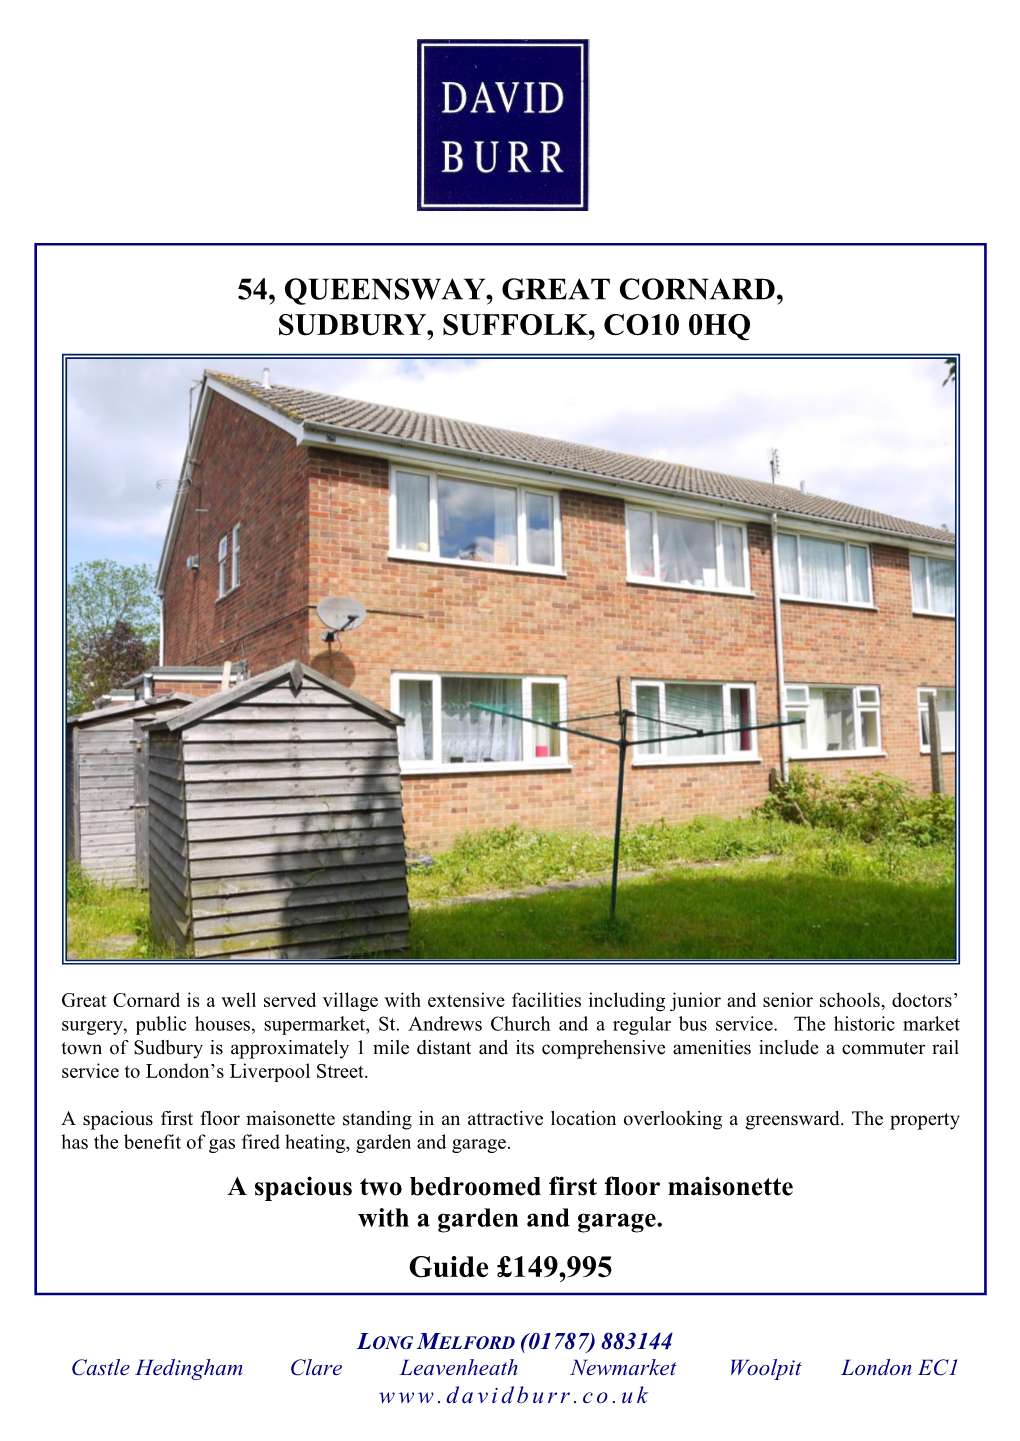 54, Queensway, Great Cornard, Sudbury, Suffolk, Co10 0Hq